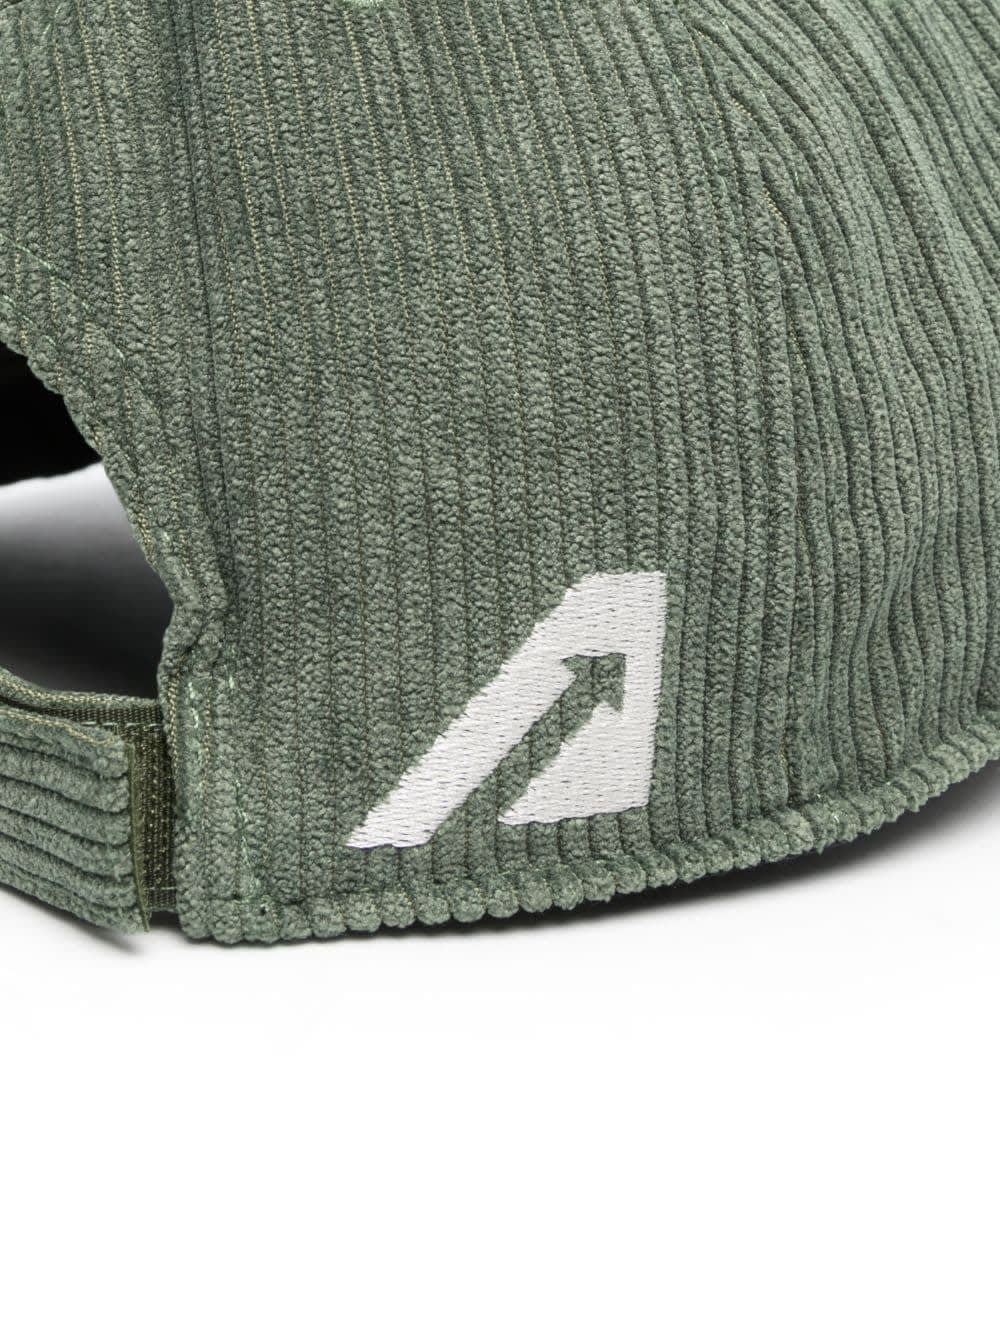 Shop Autry Military Green Corduroy Baseball Cap With Logo